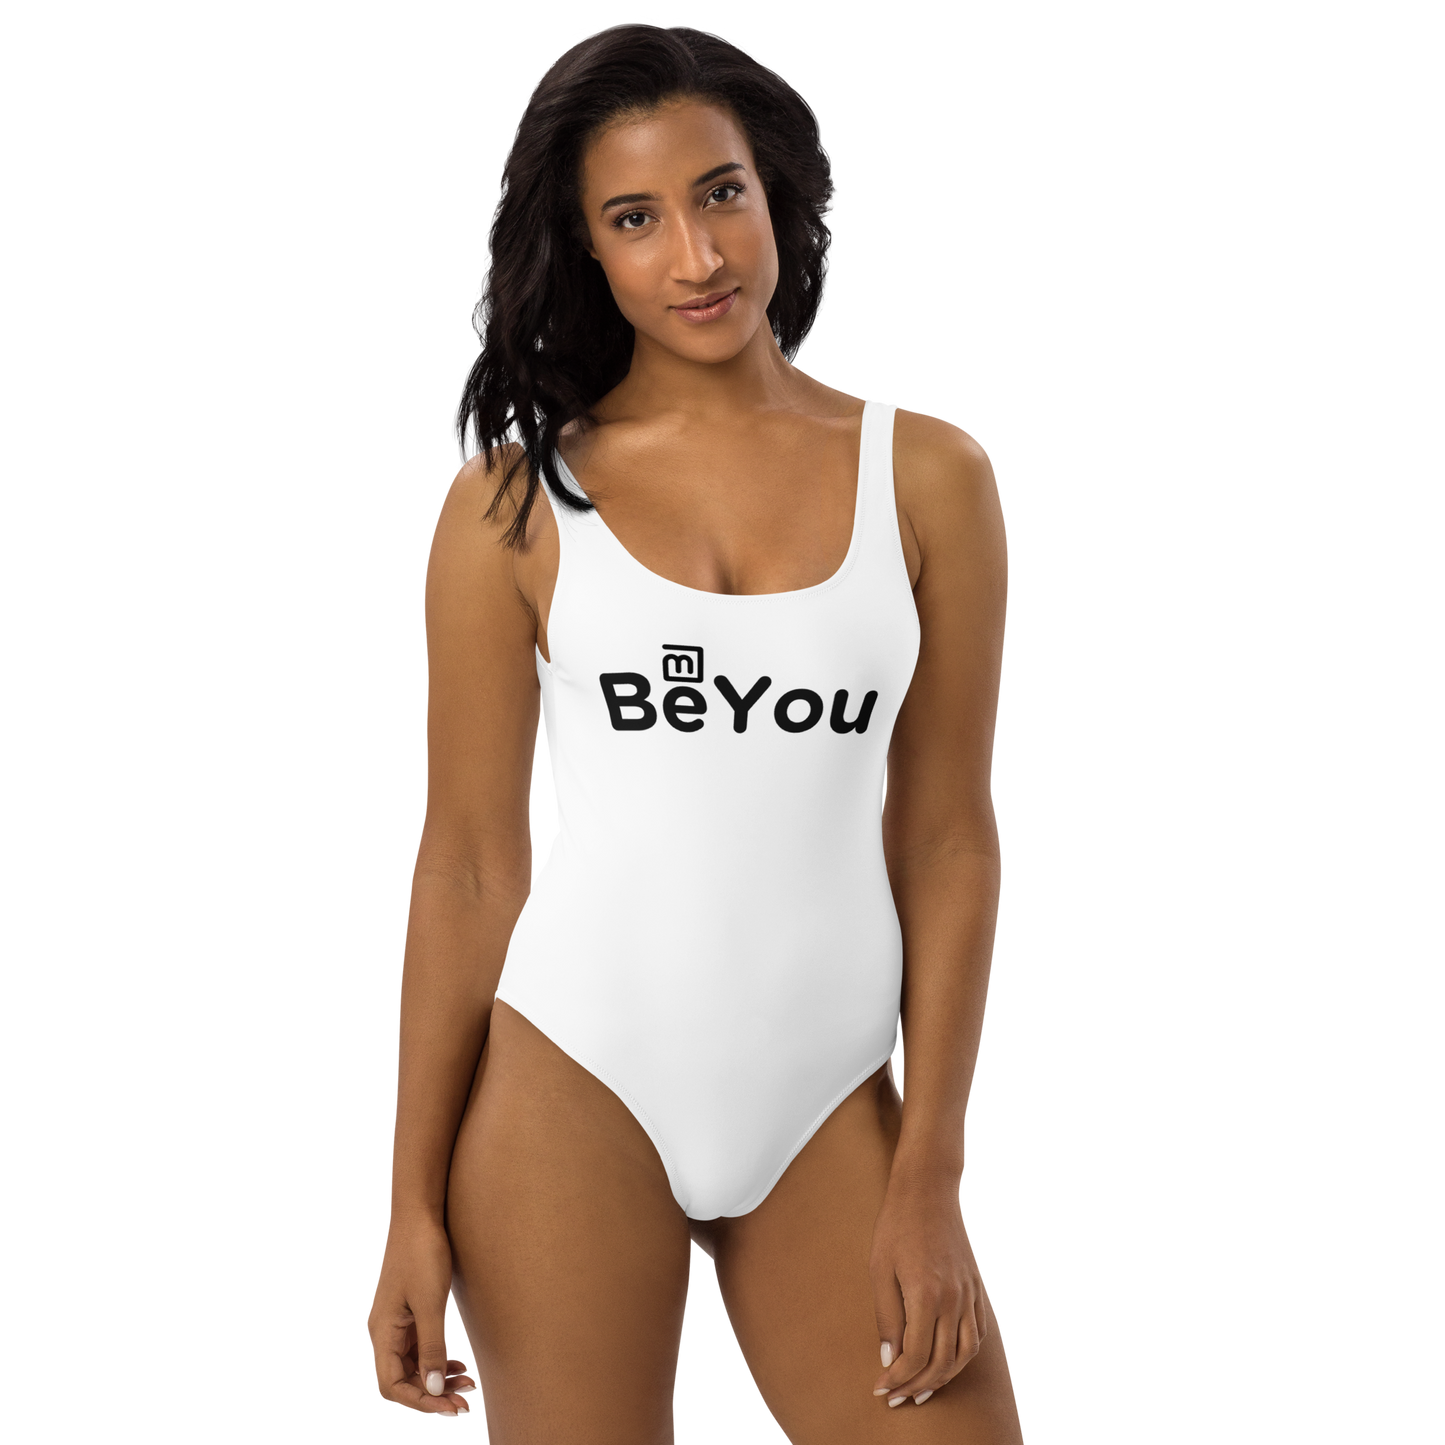 White One-Piece Body Shaper BeYou Swimsuit